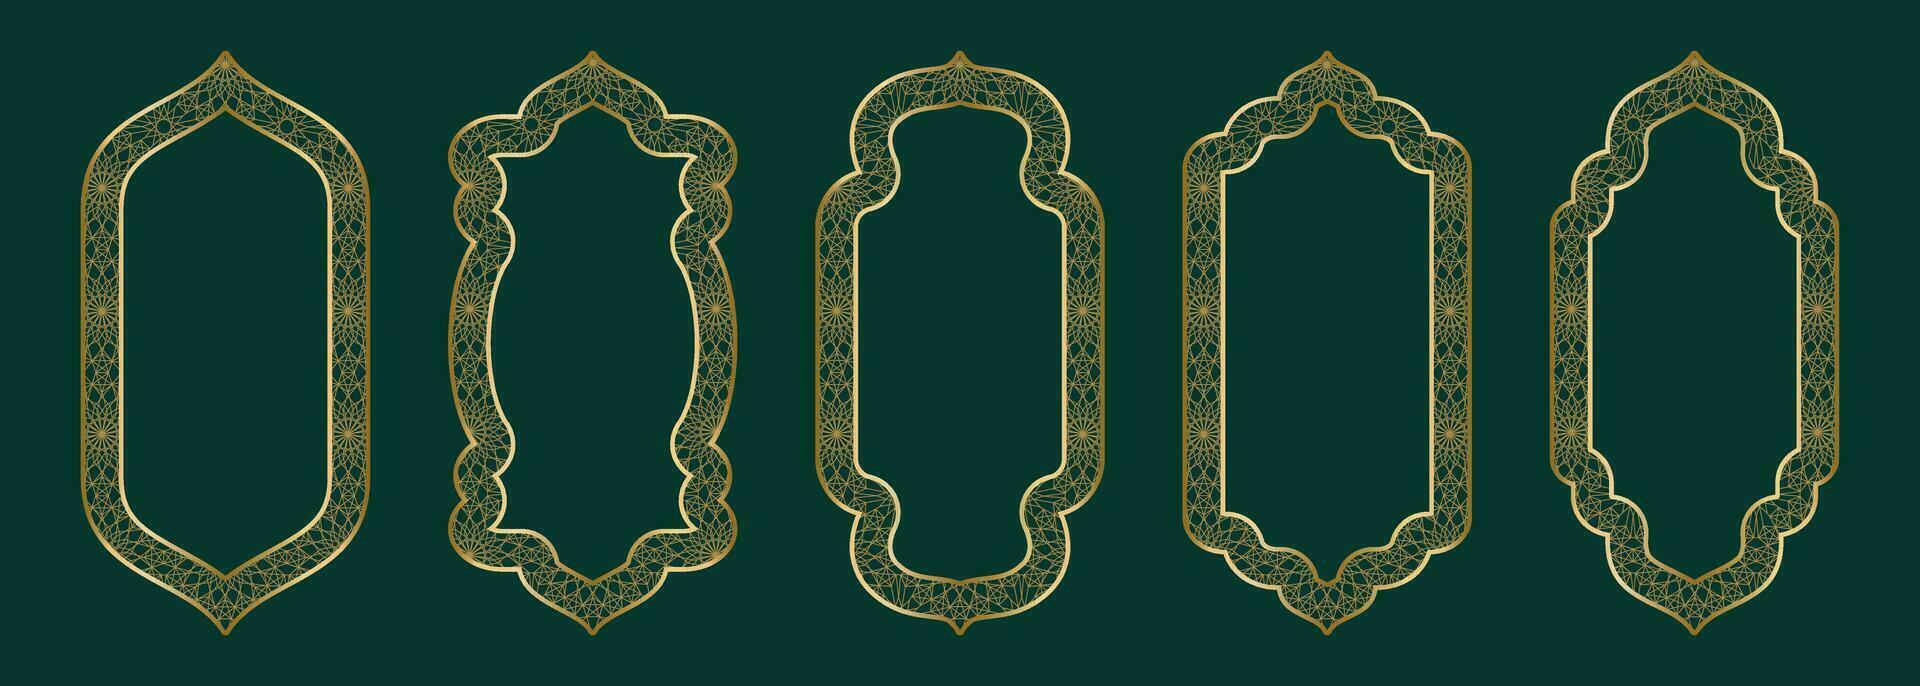 guld båge ram form islamic dörr eller fönster med geometrisk girikh mönster, silhuett arabicum båge. samling i orientalisk stil. ramar i arabicum muslim design för ramadan kareem. vektor illustration